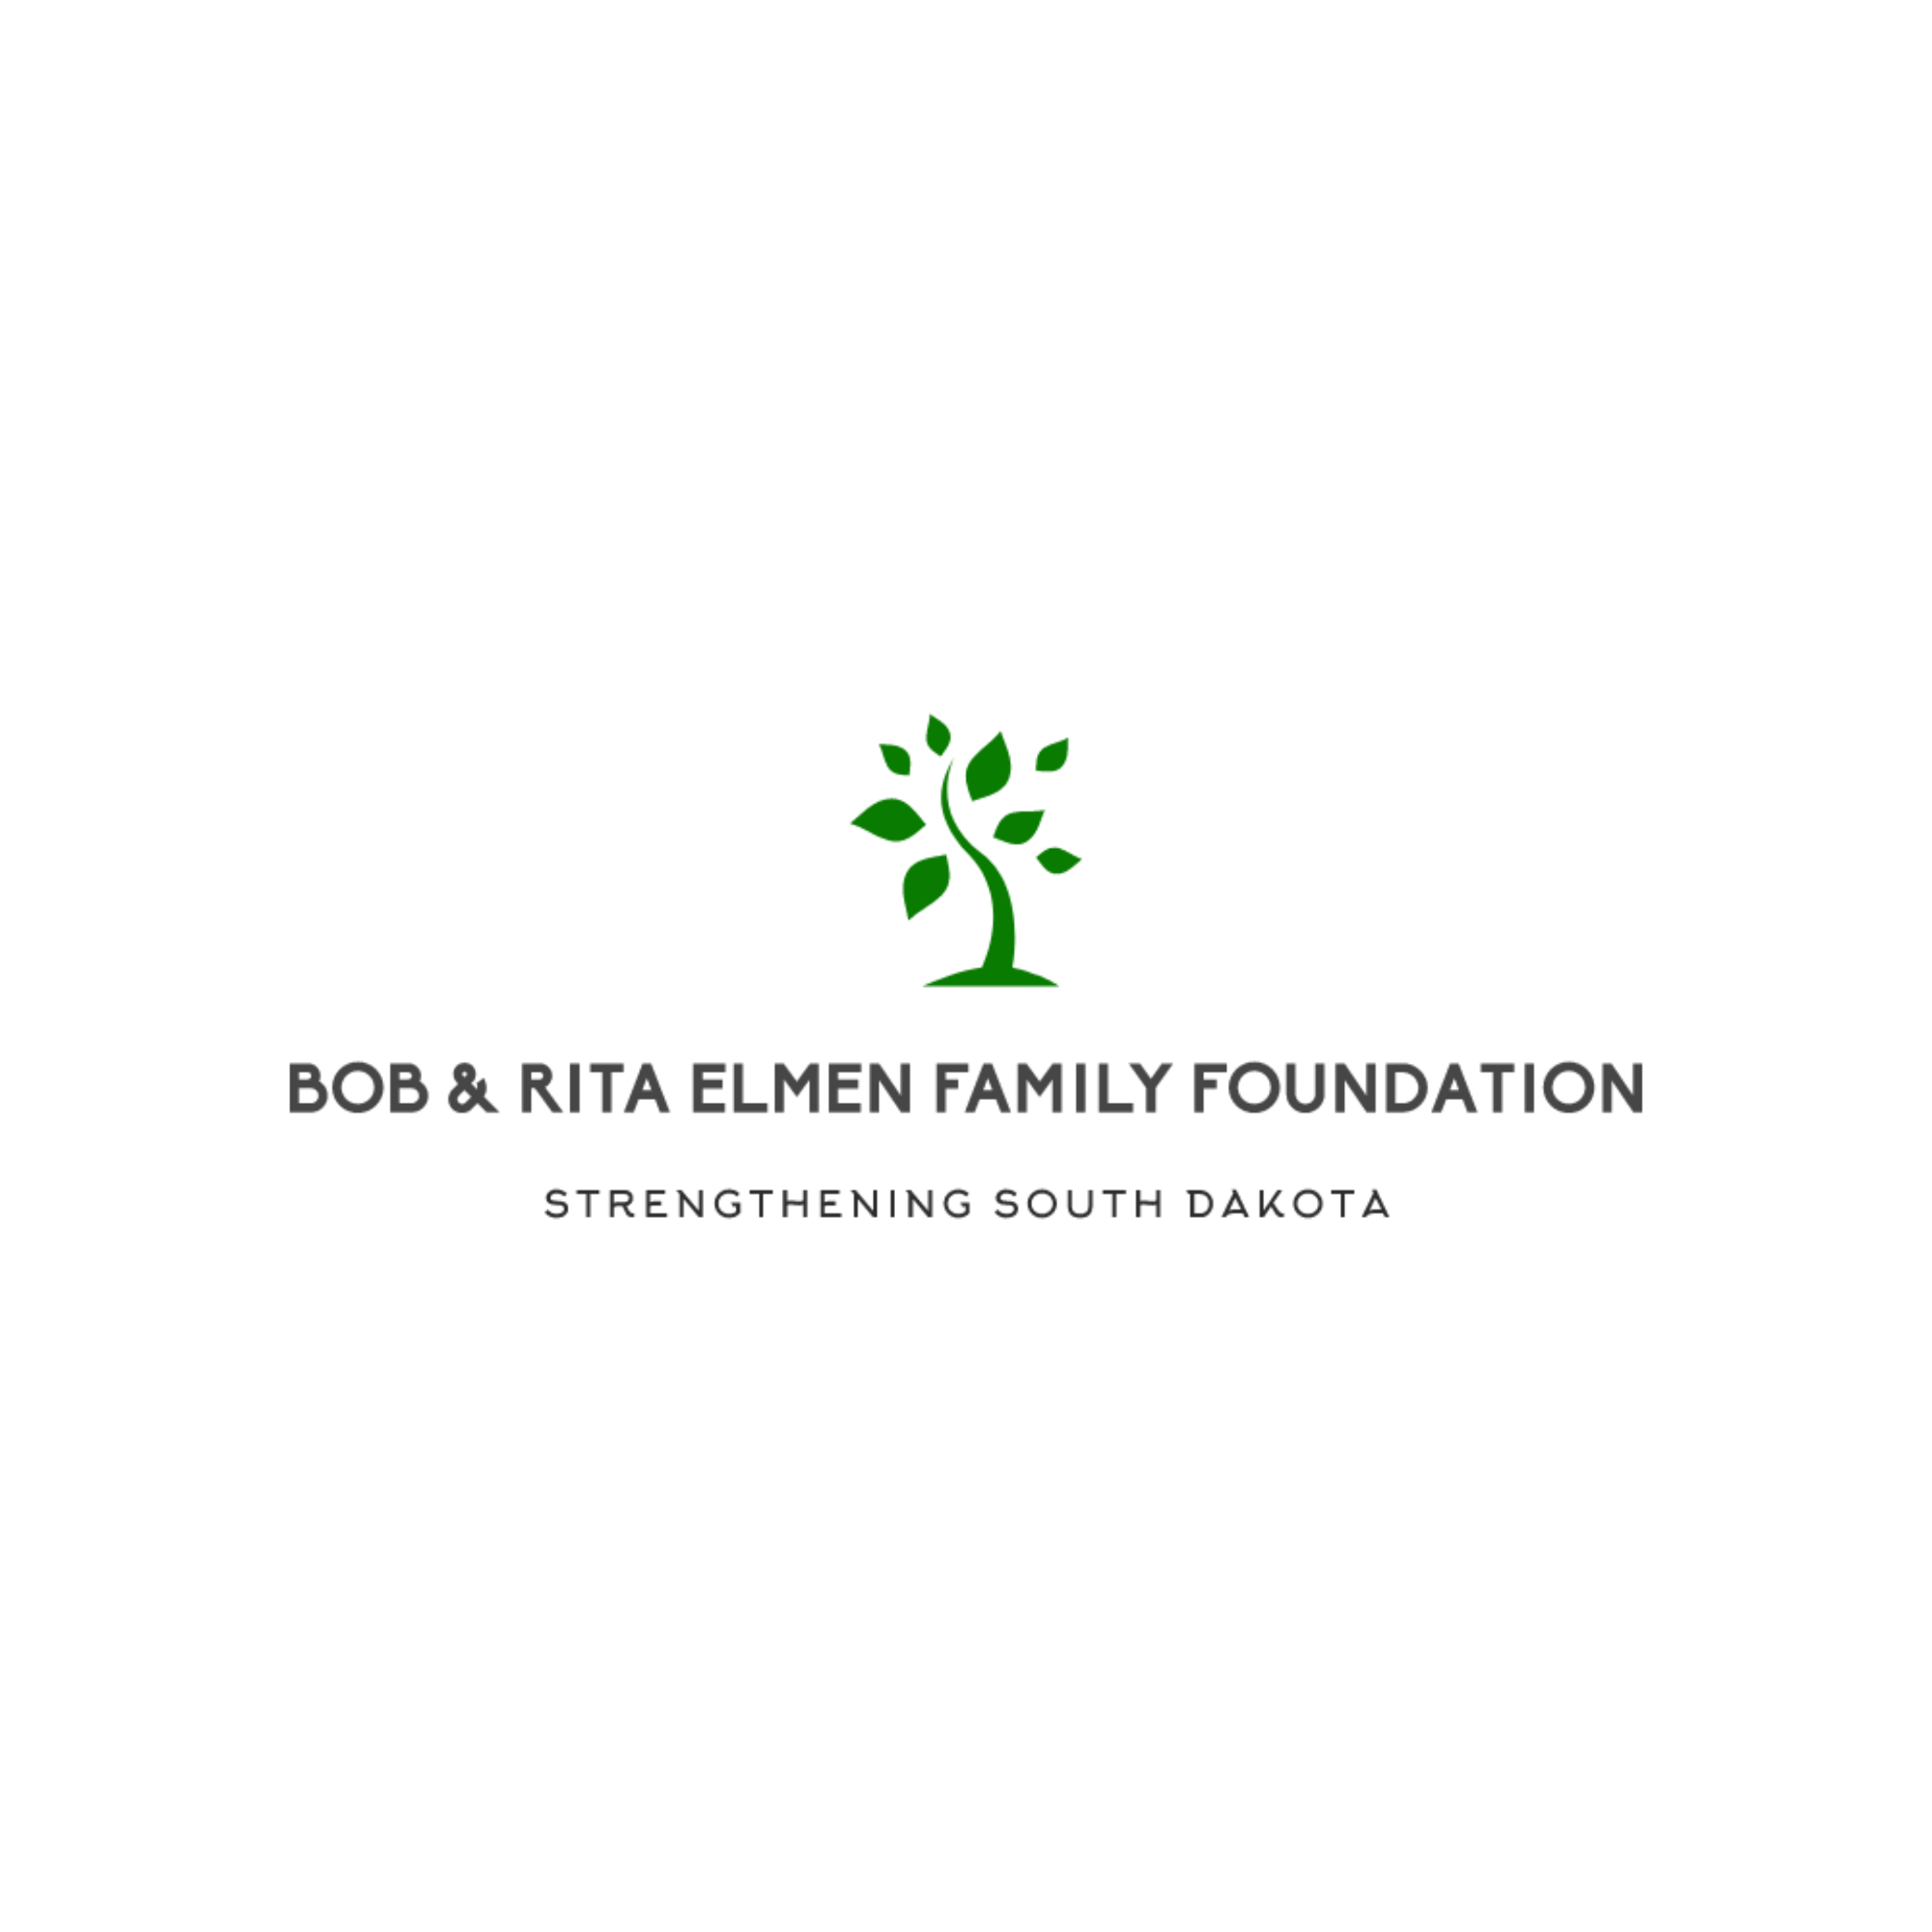 Bob and Rita Elmen Family Foundation